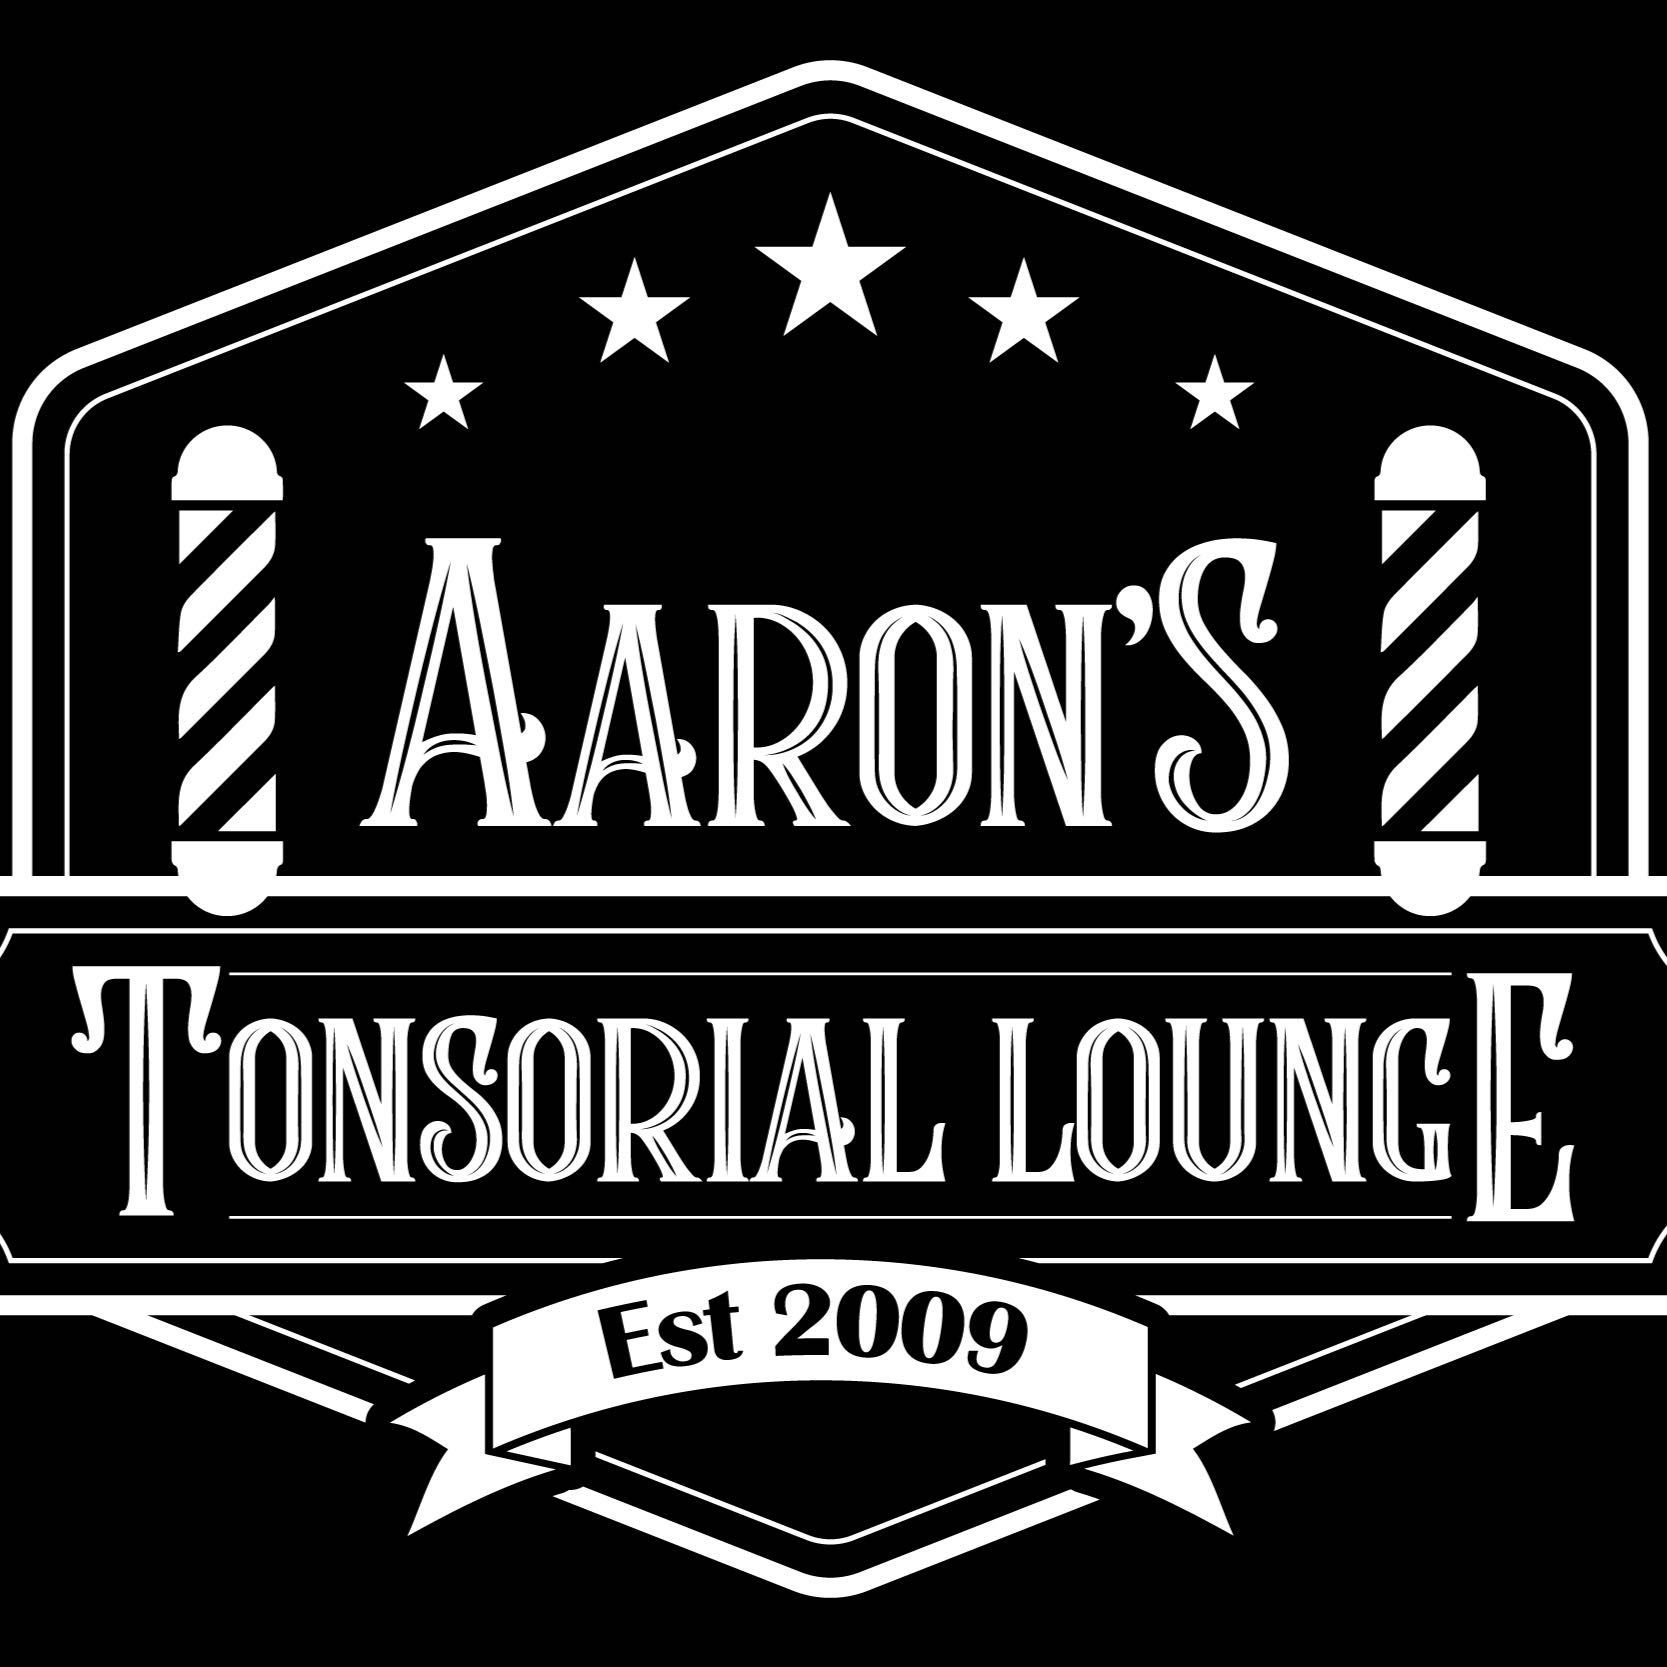 Aaron’s Tonsorial Lounge, 22 E. Chicago Ave, Suite 113 Loft 7, Naperville, 60540